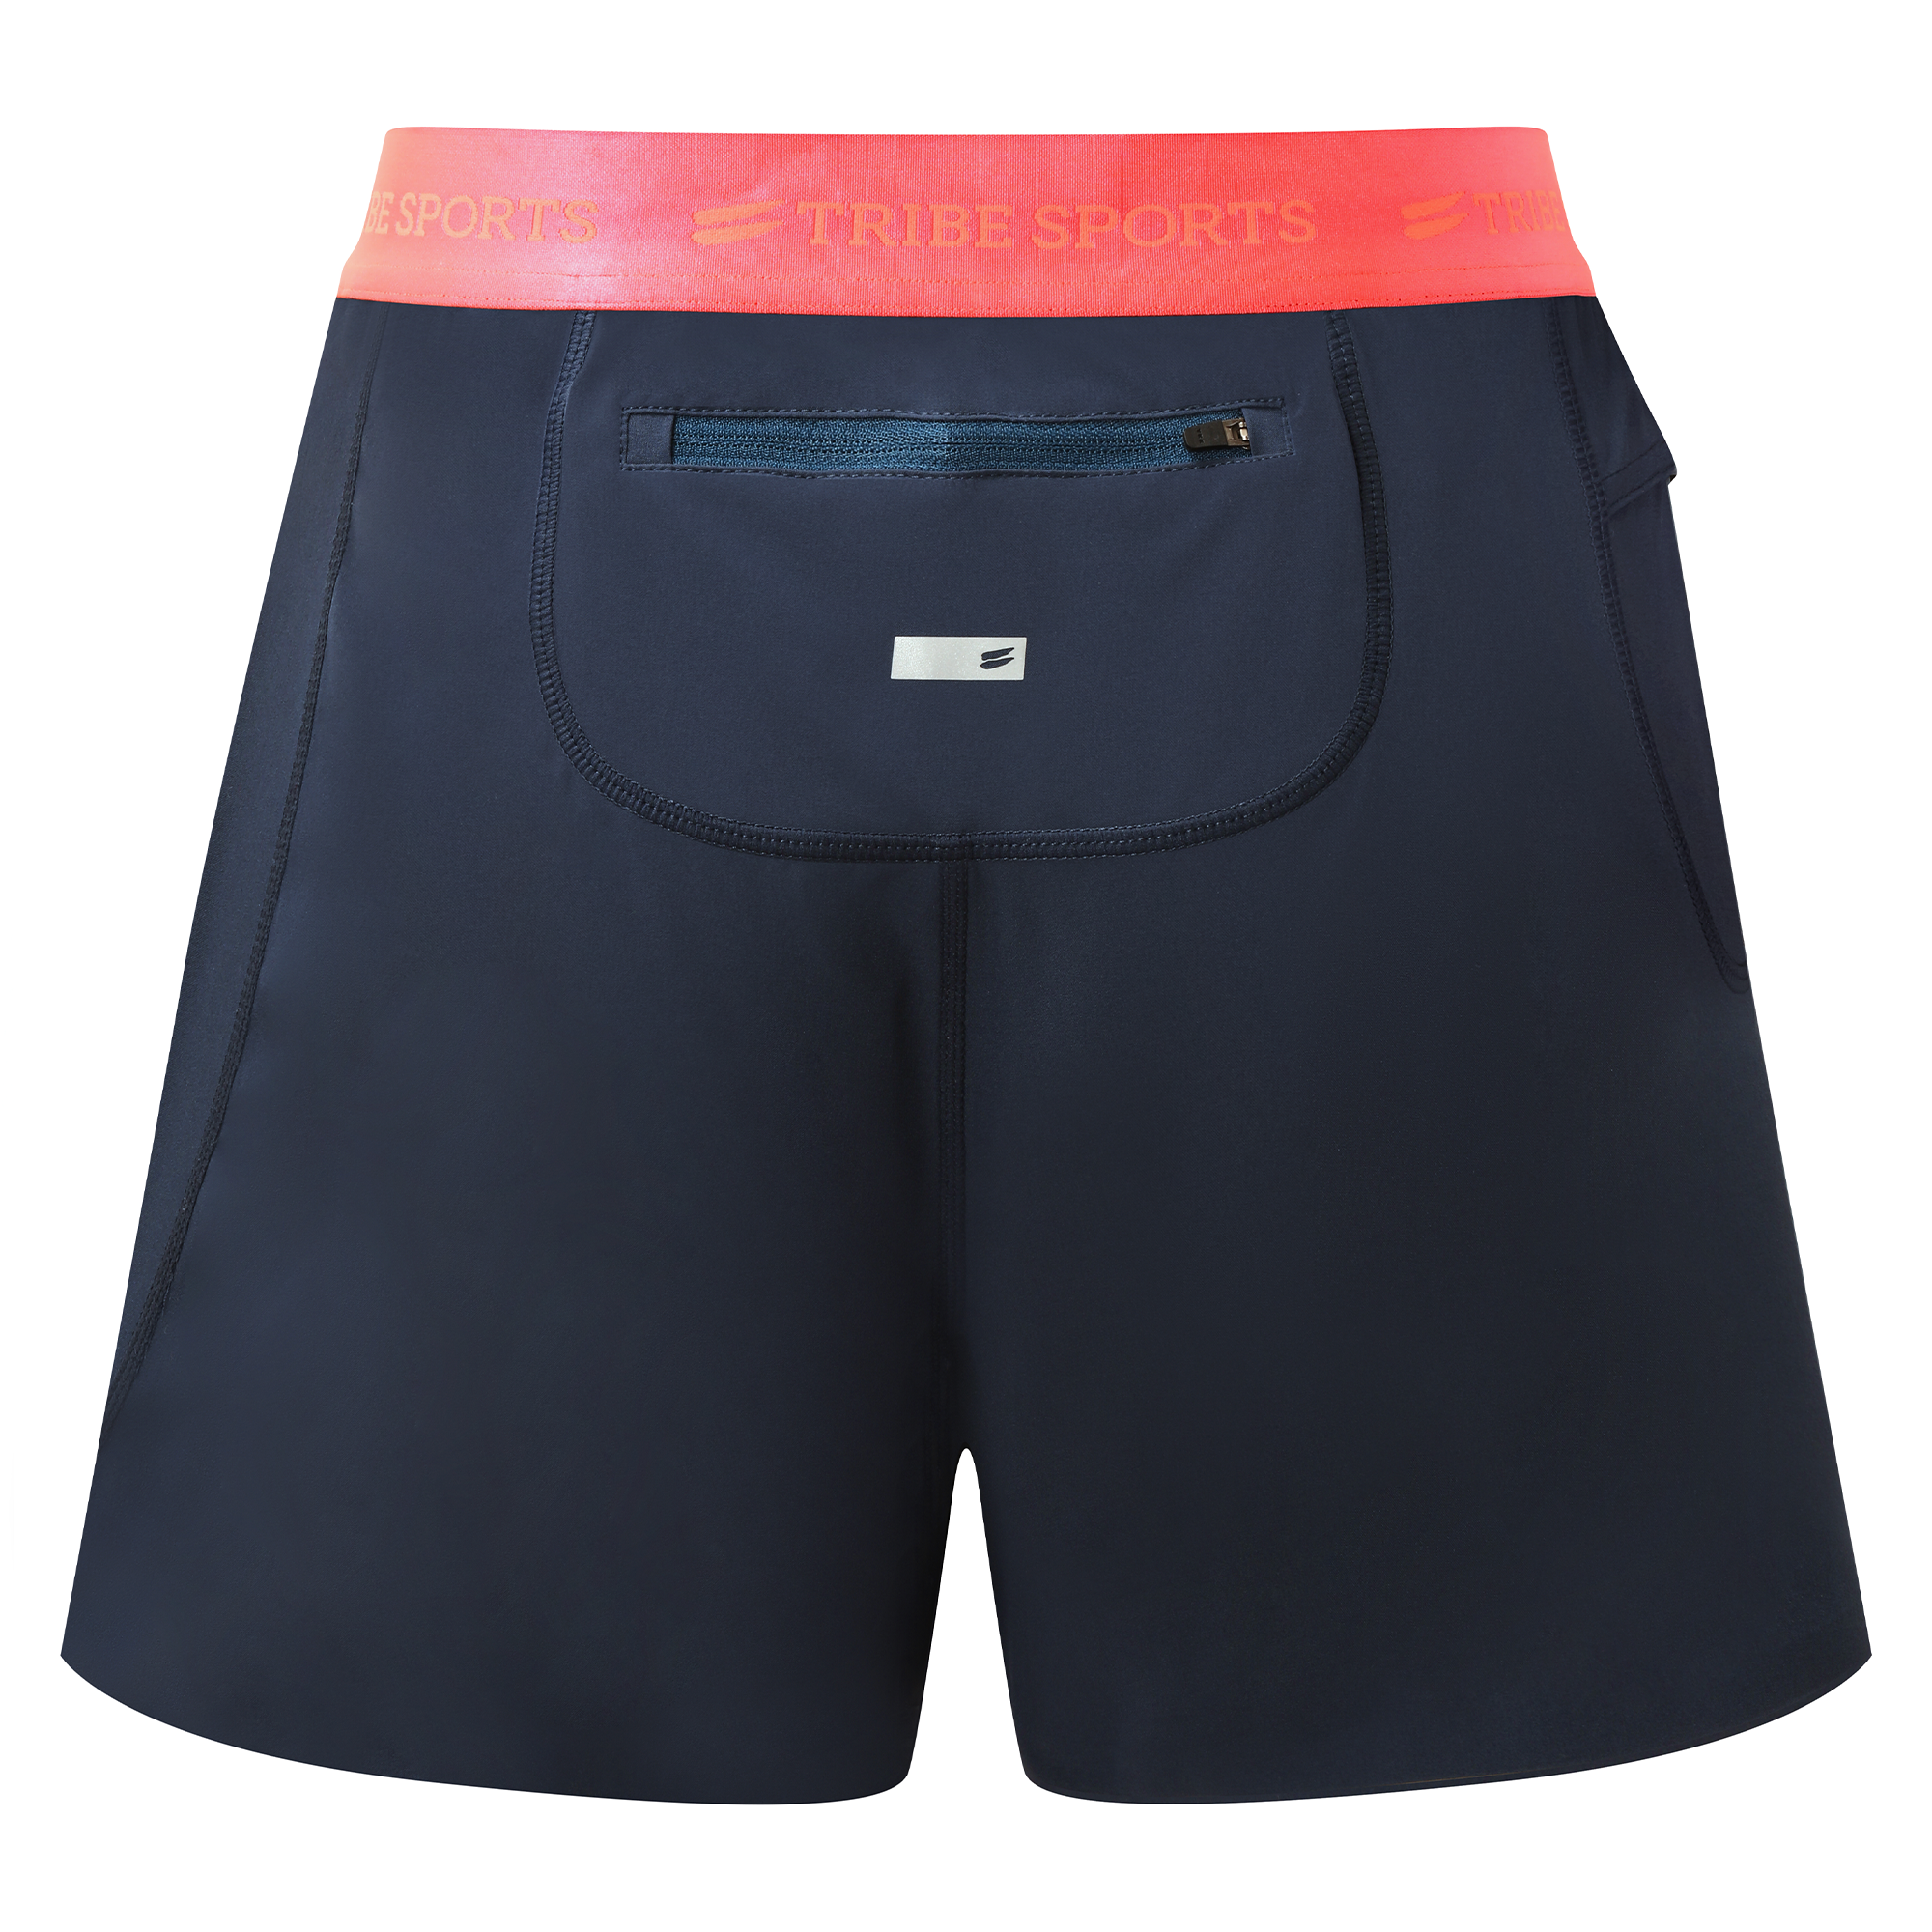 Endure Swift Shorts - Navy/Charcoal Tribe - Sports